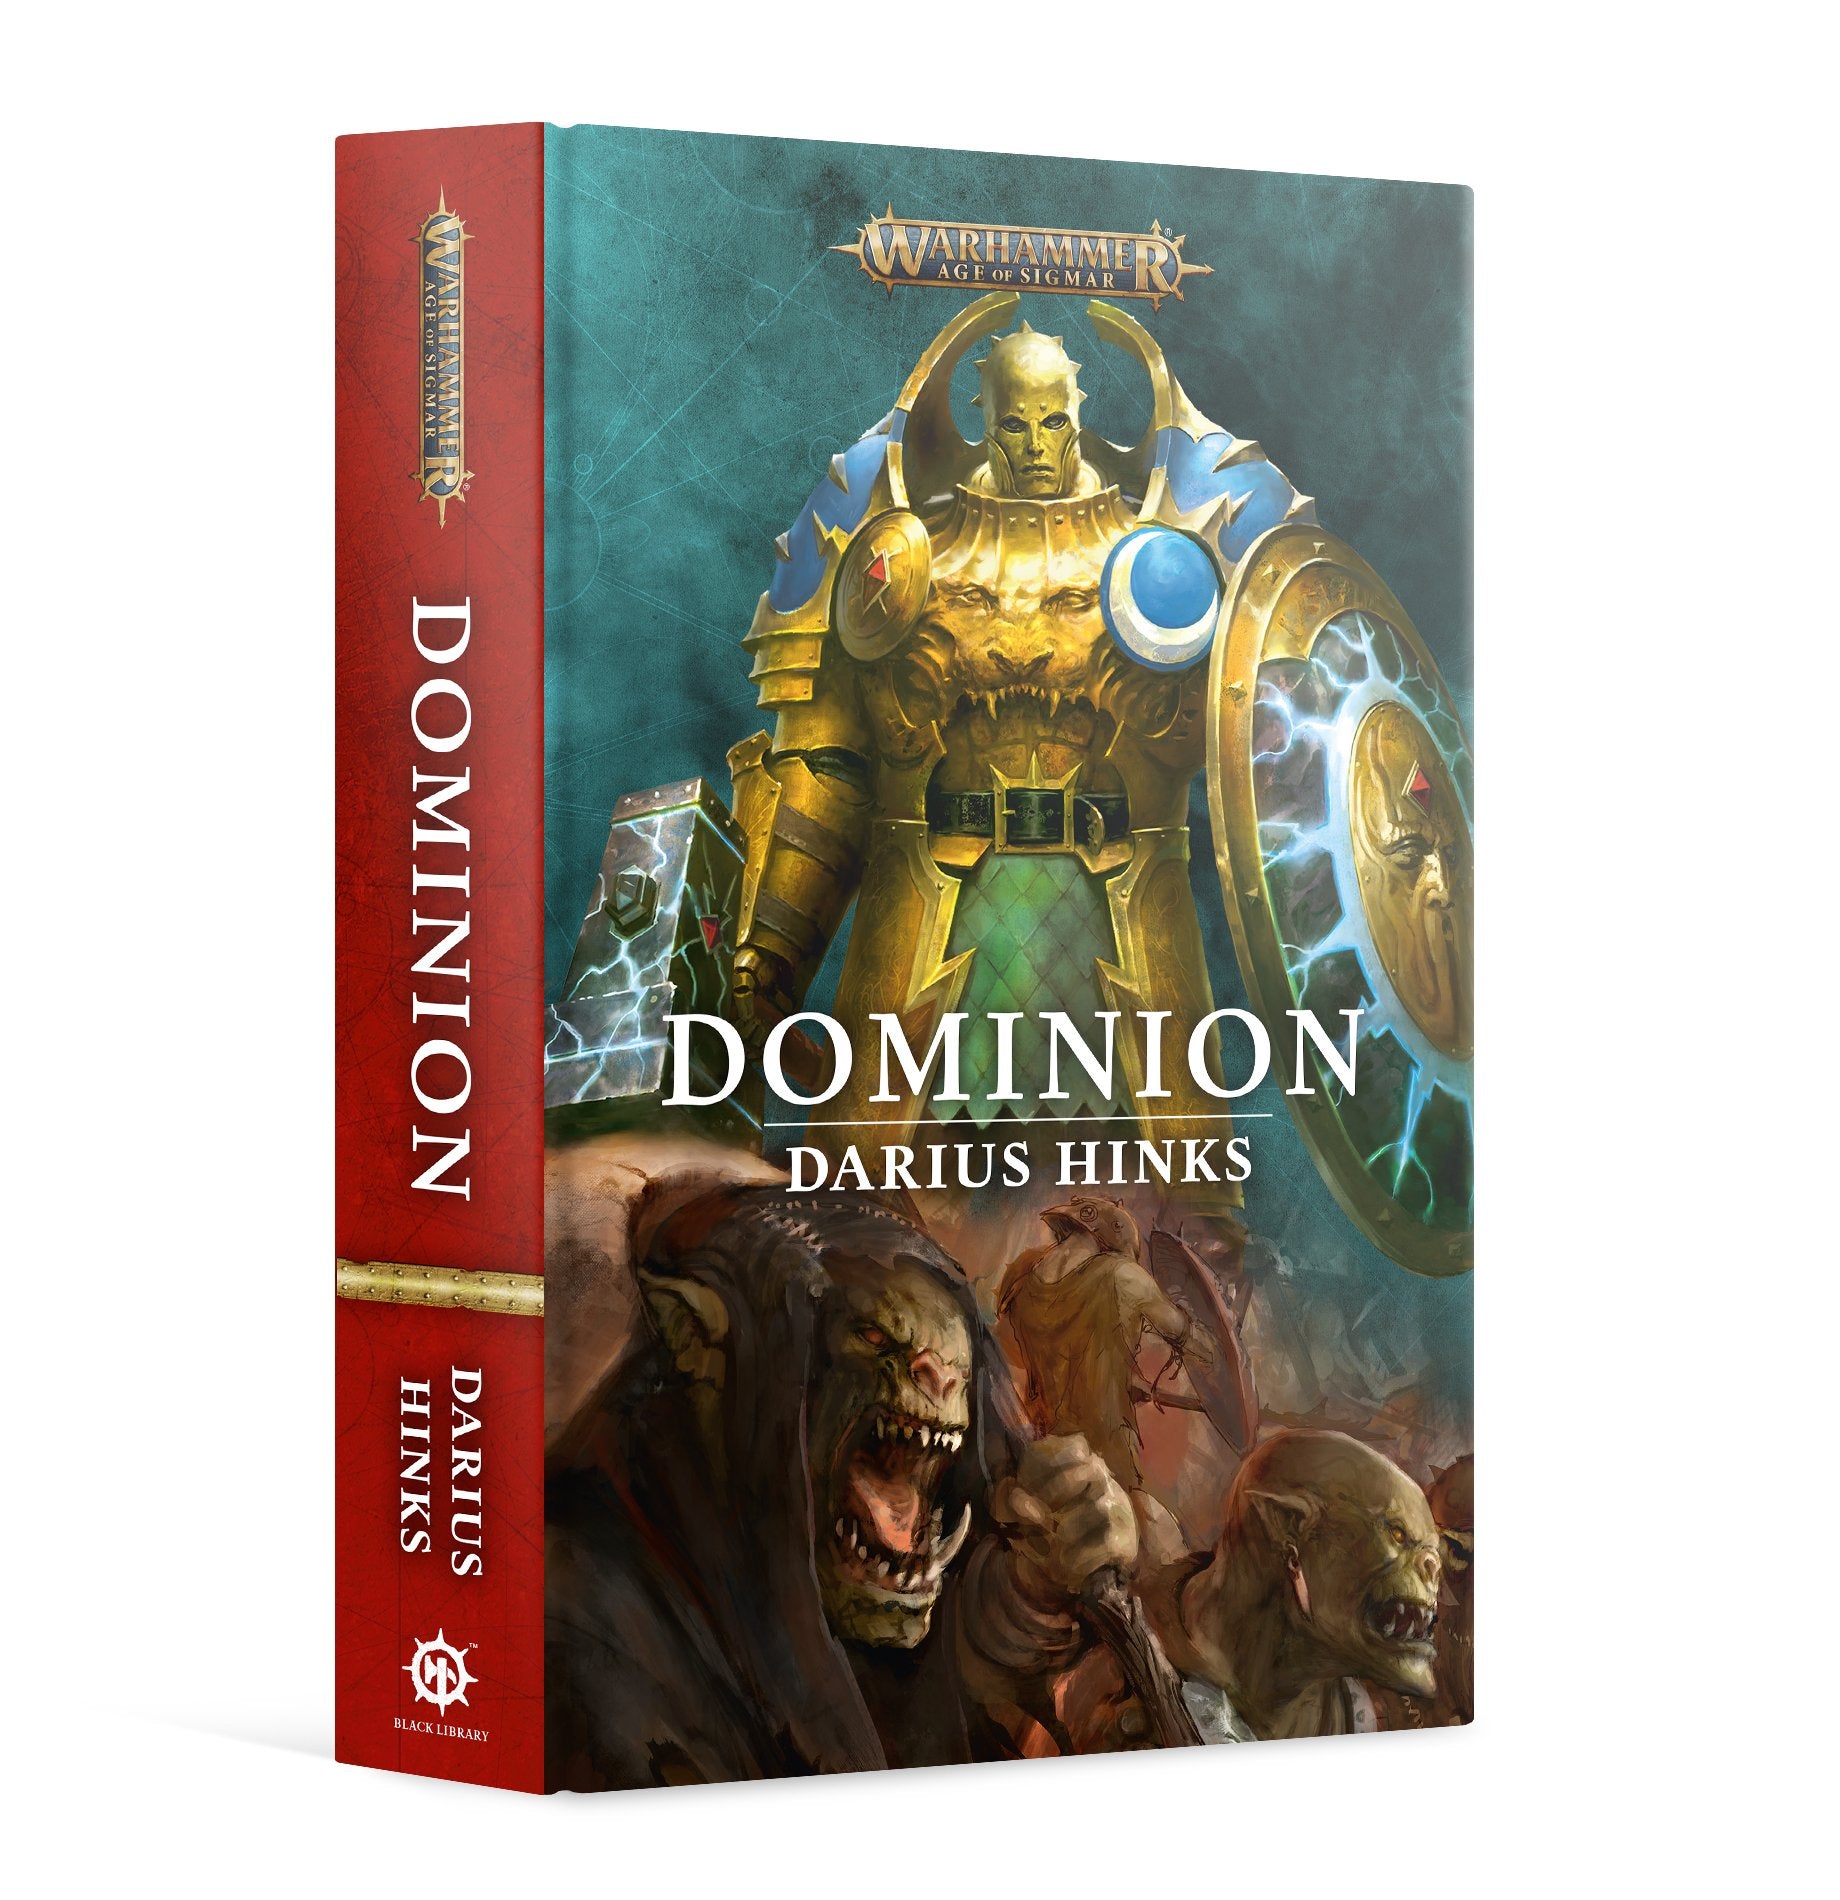 Warhammer Age of Sigmar: Dominion (HB)